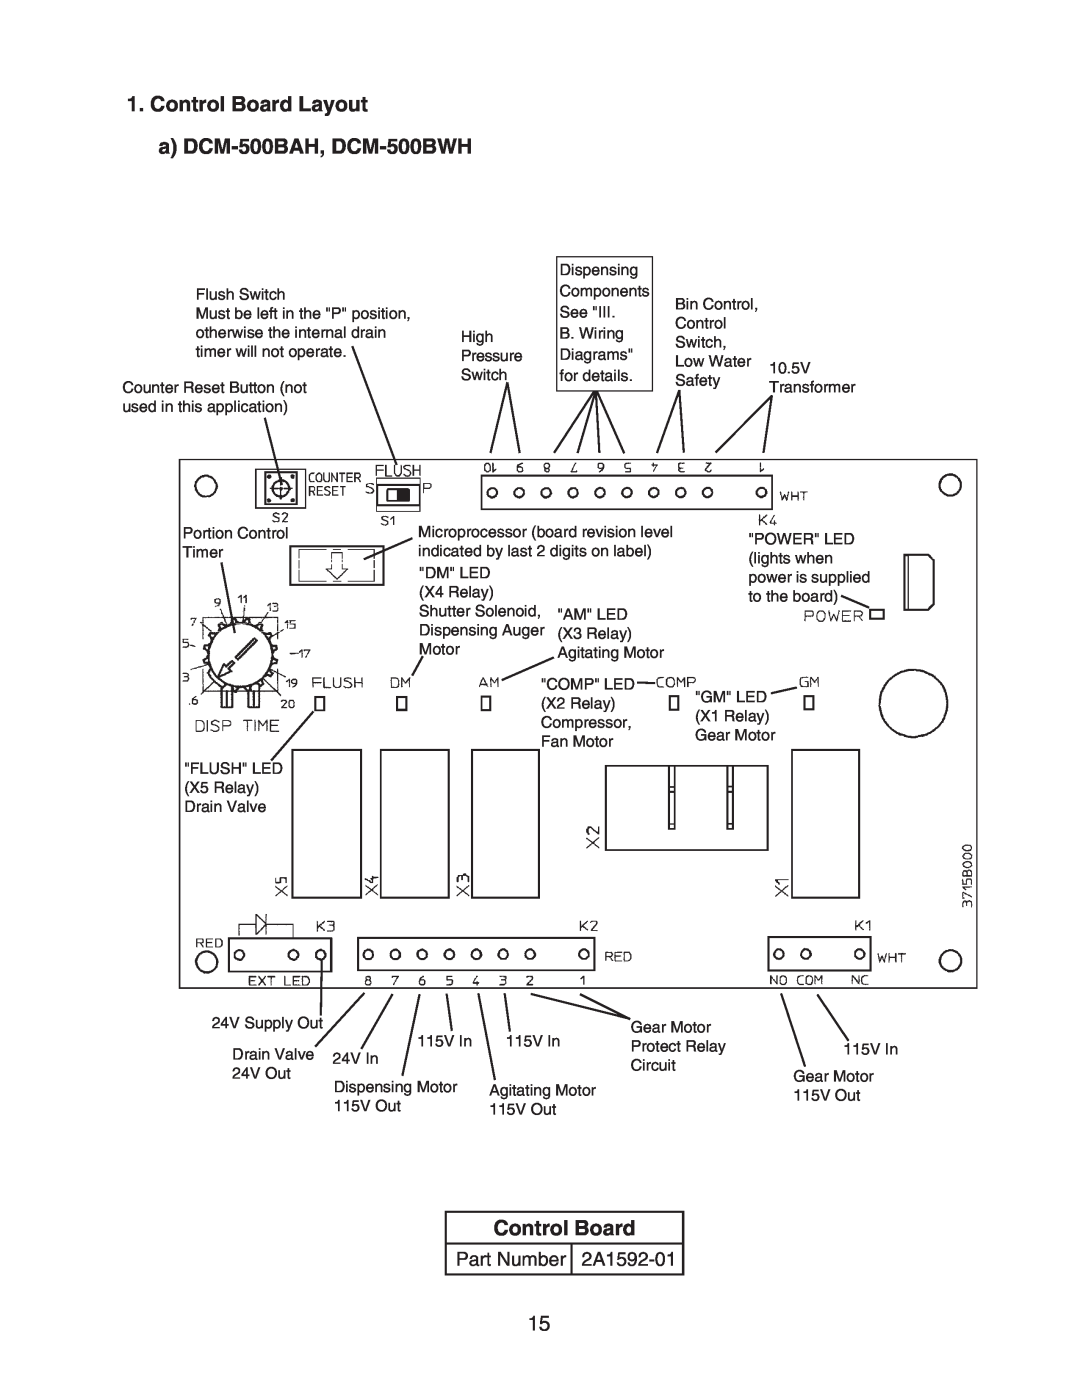 Hoshizaki DCM-500BWH-OS service manual Control Board Layout a DCM-500BAH, DCM-500BWH, Part Number 2A1592-01 